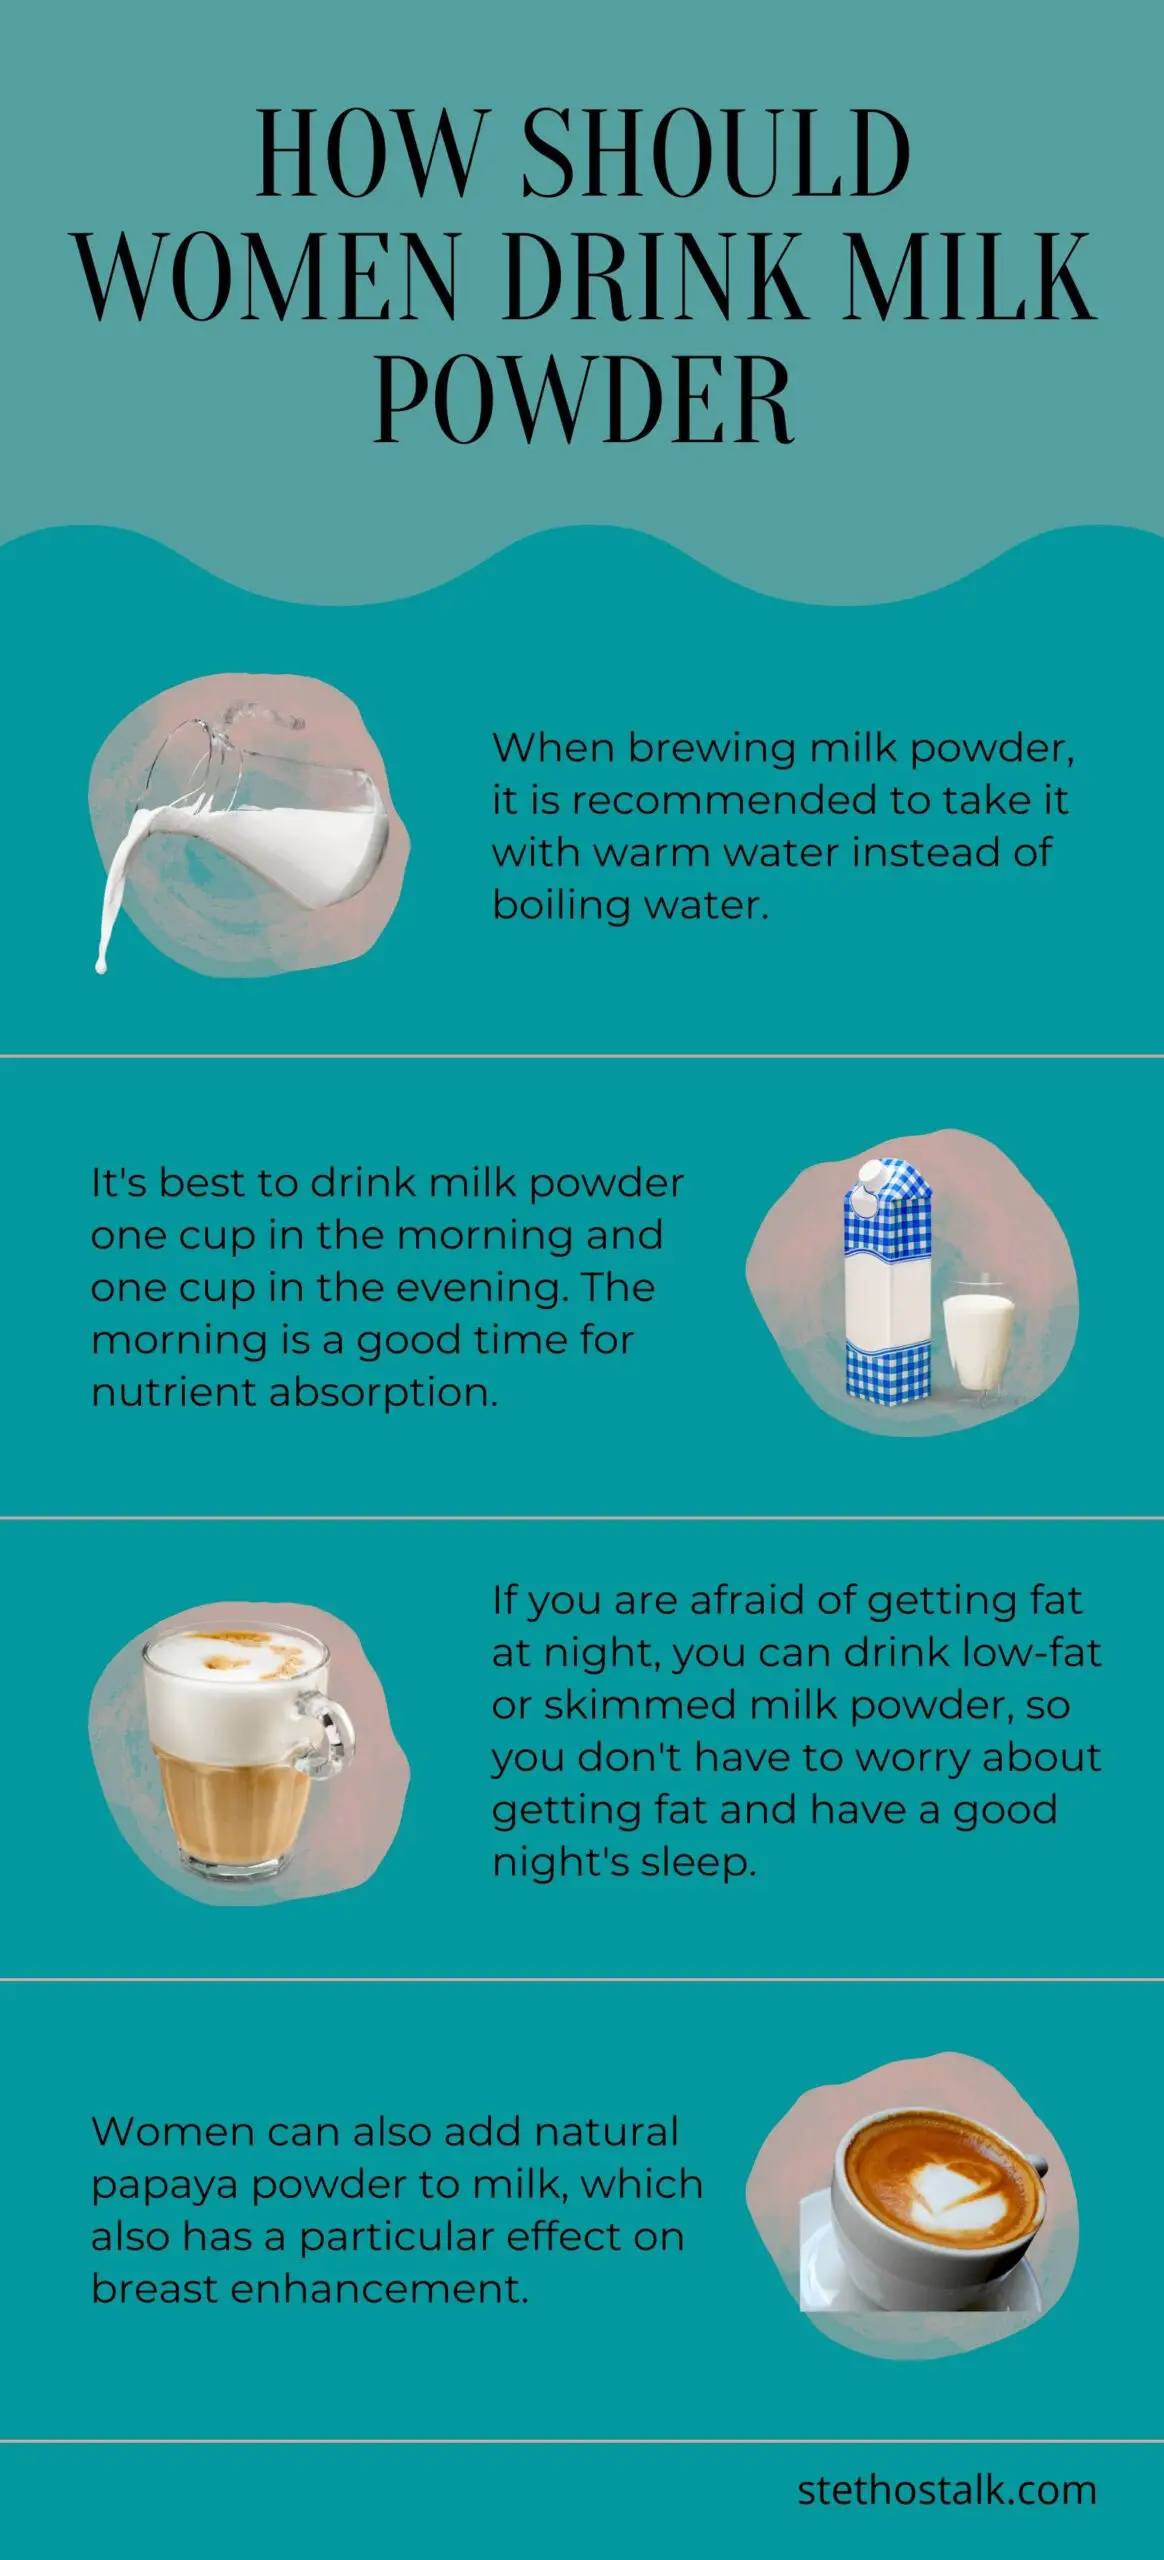 How to drink women's milk powder